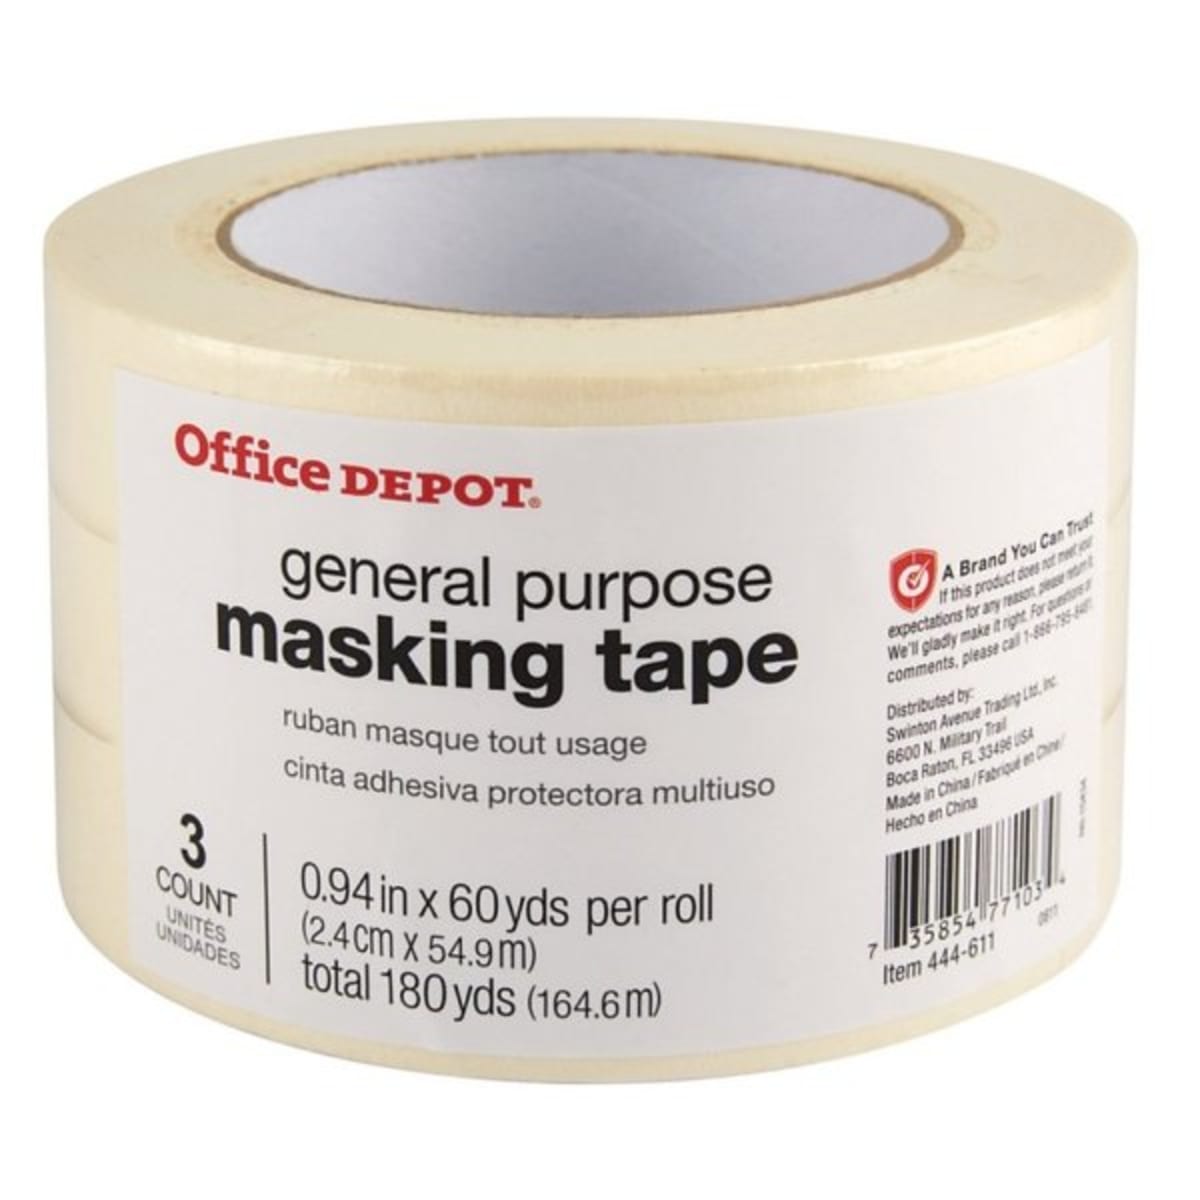 3M Highland Masking Tape 2 x 60 Yd. - Office Depot